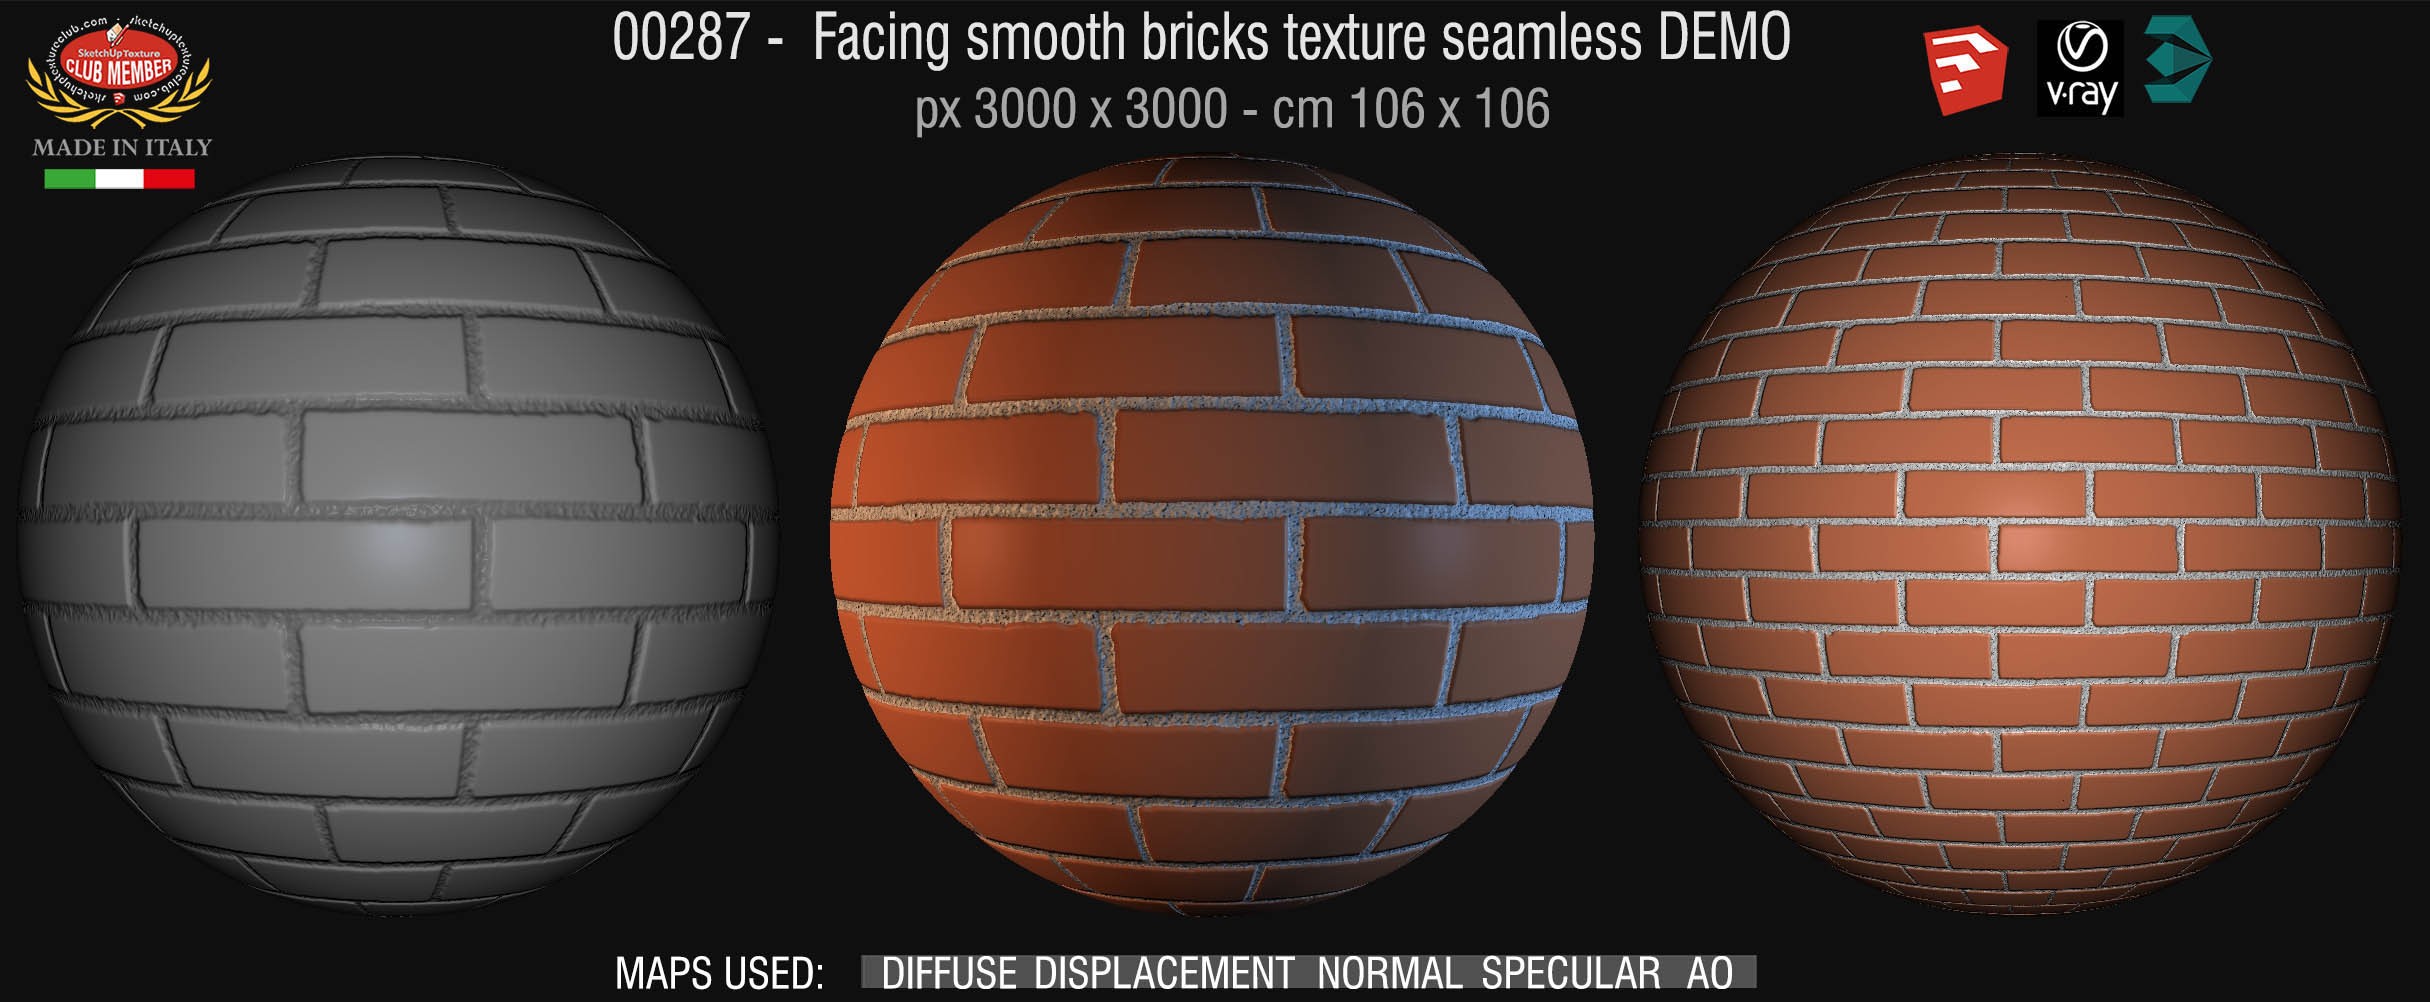 00287 Facing smooth bricks texture seamless + maps DEMO